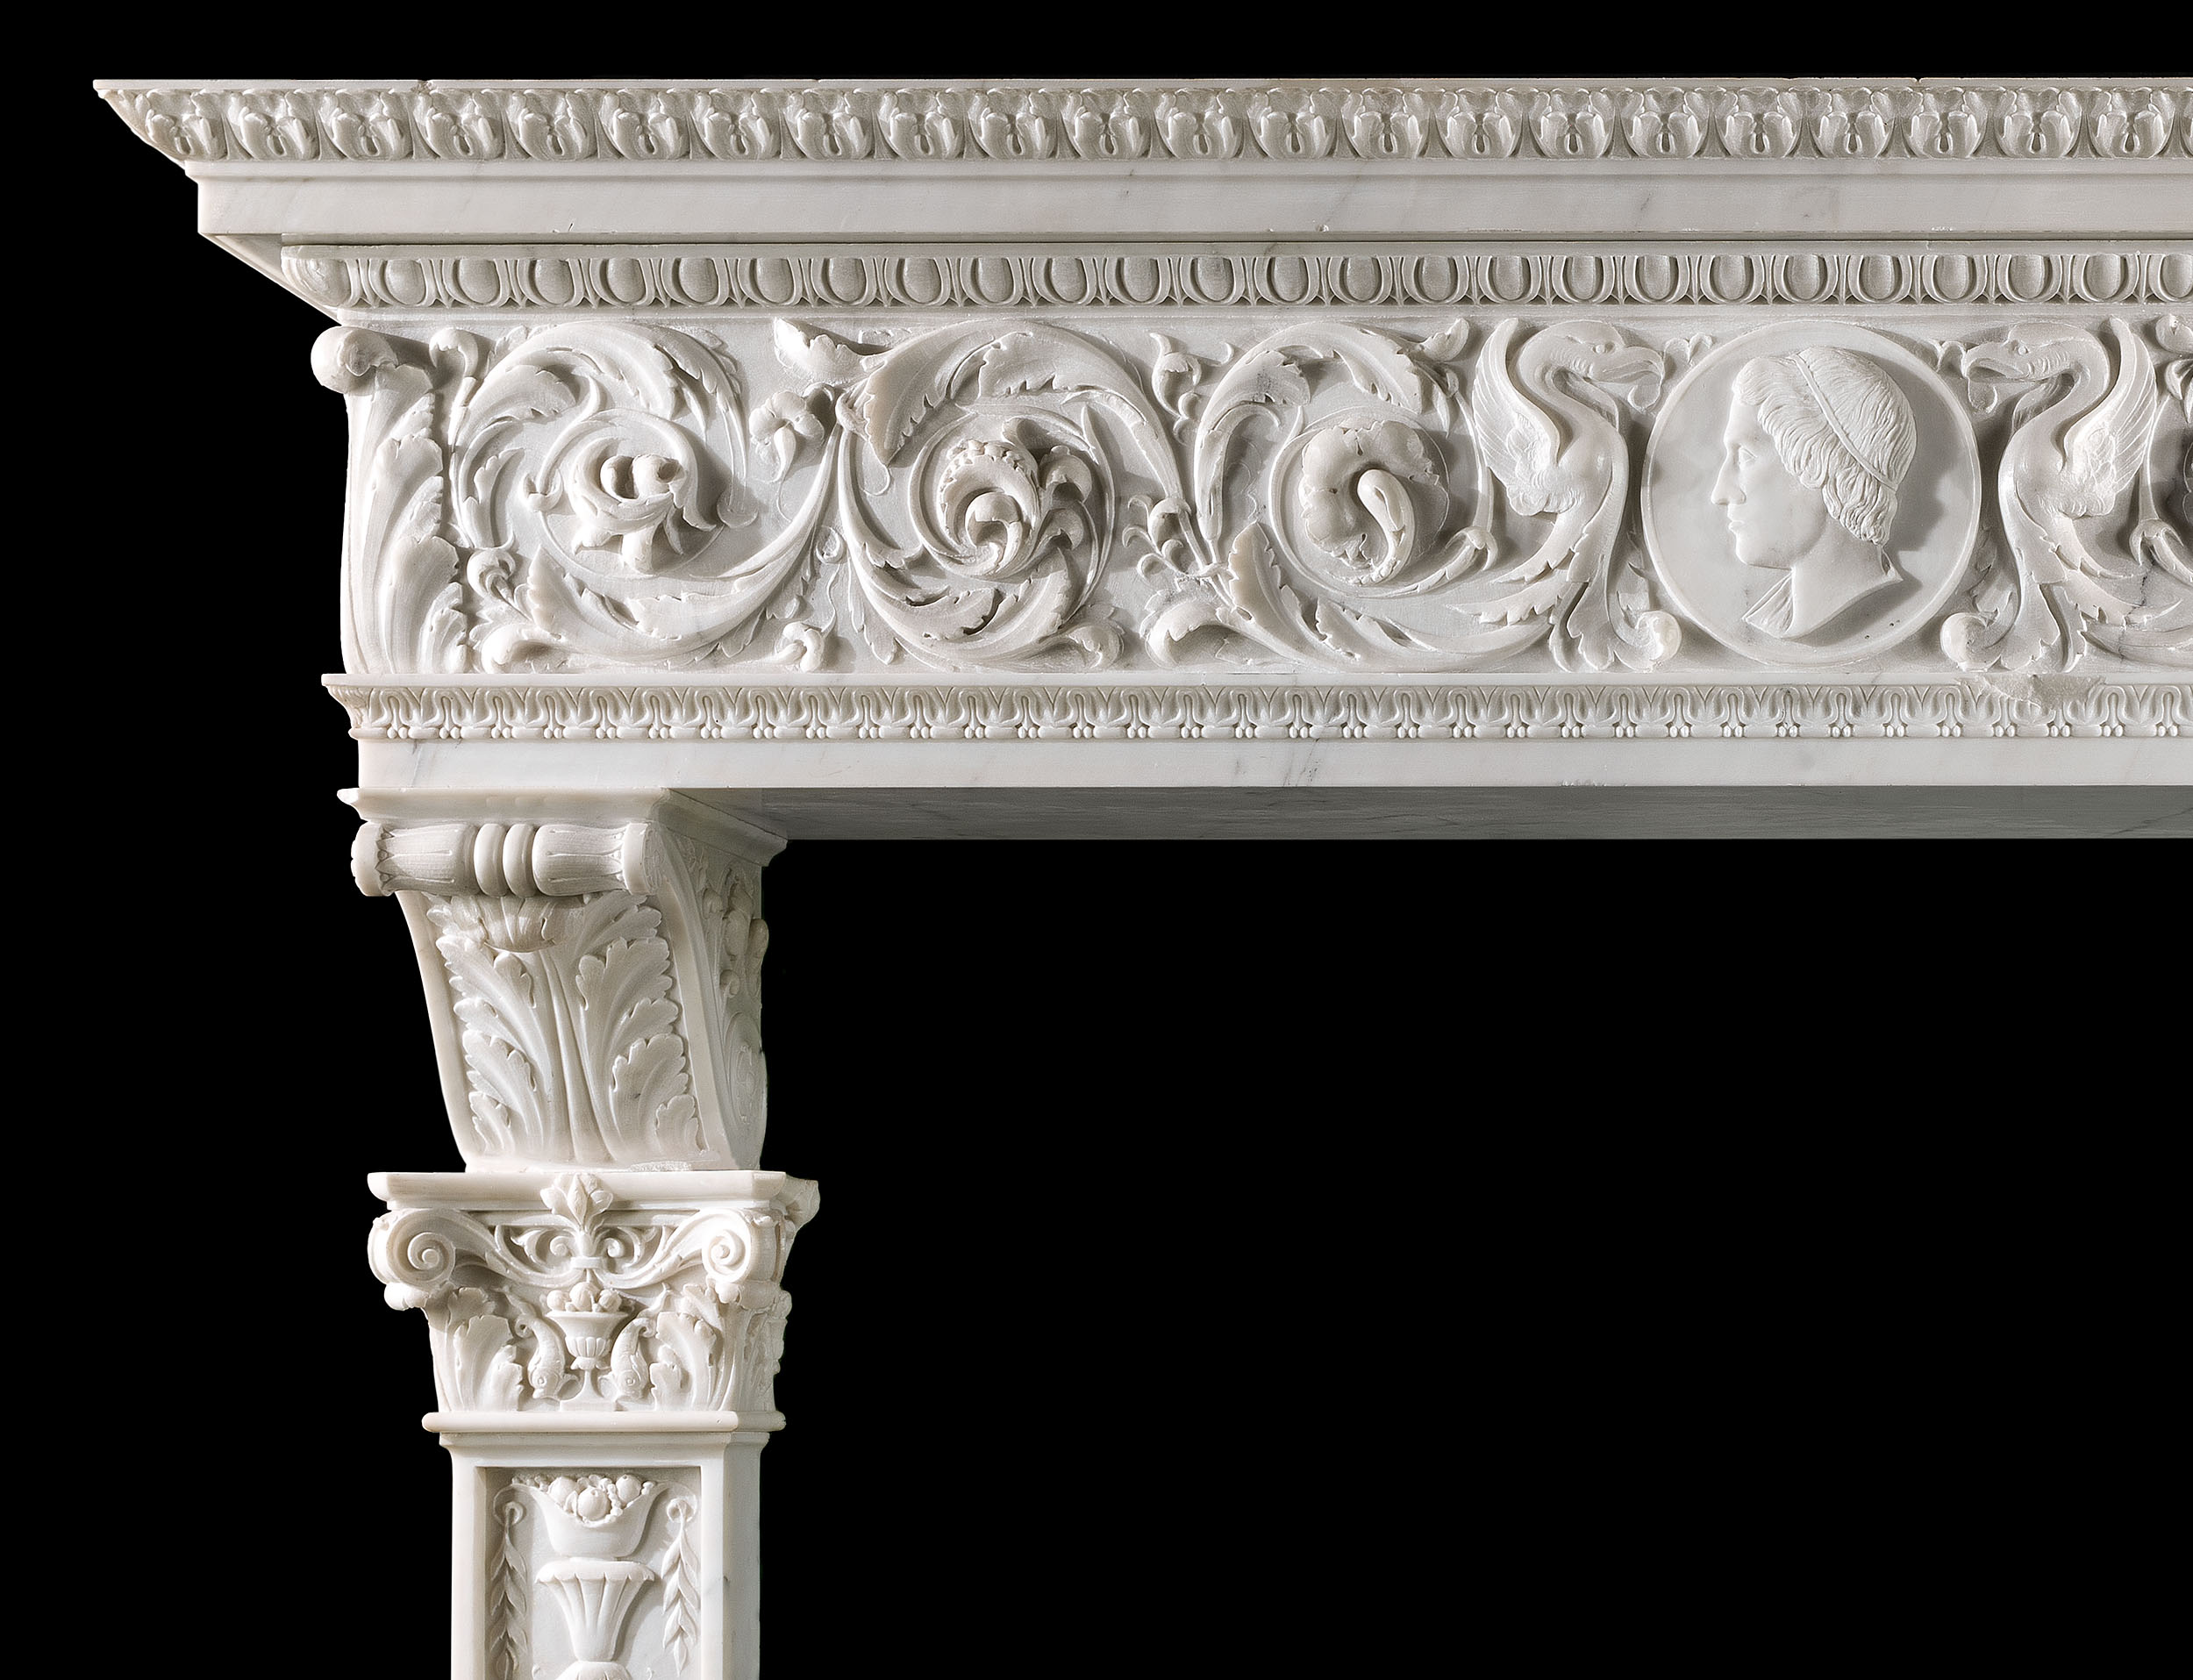 An Italian Palazzo Renaissance manner marble Chimneypiece.

